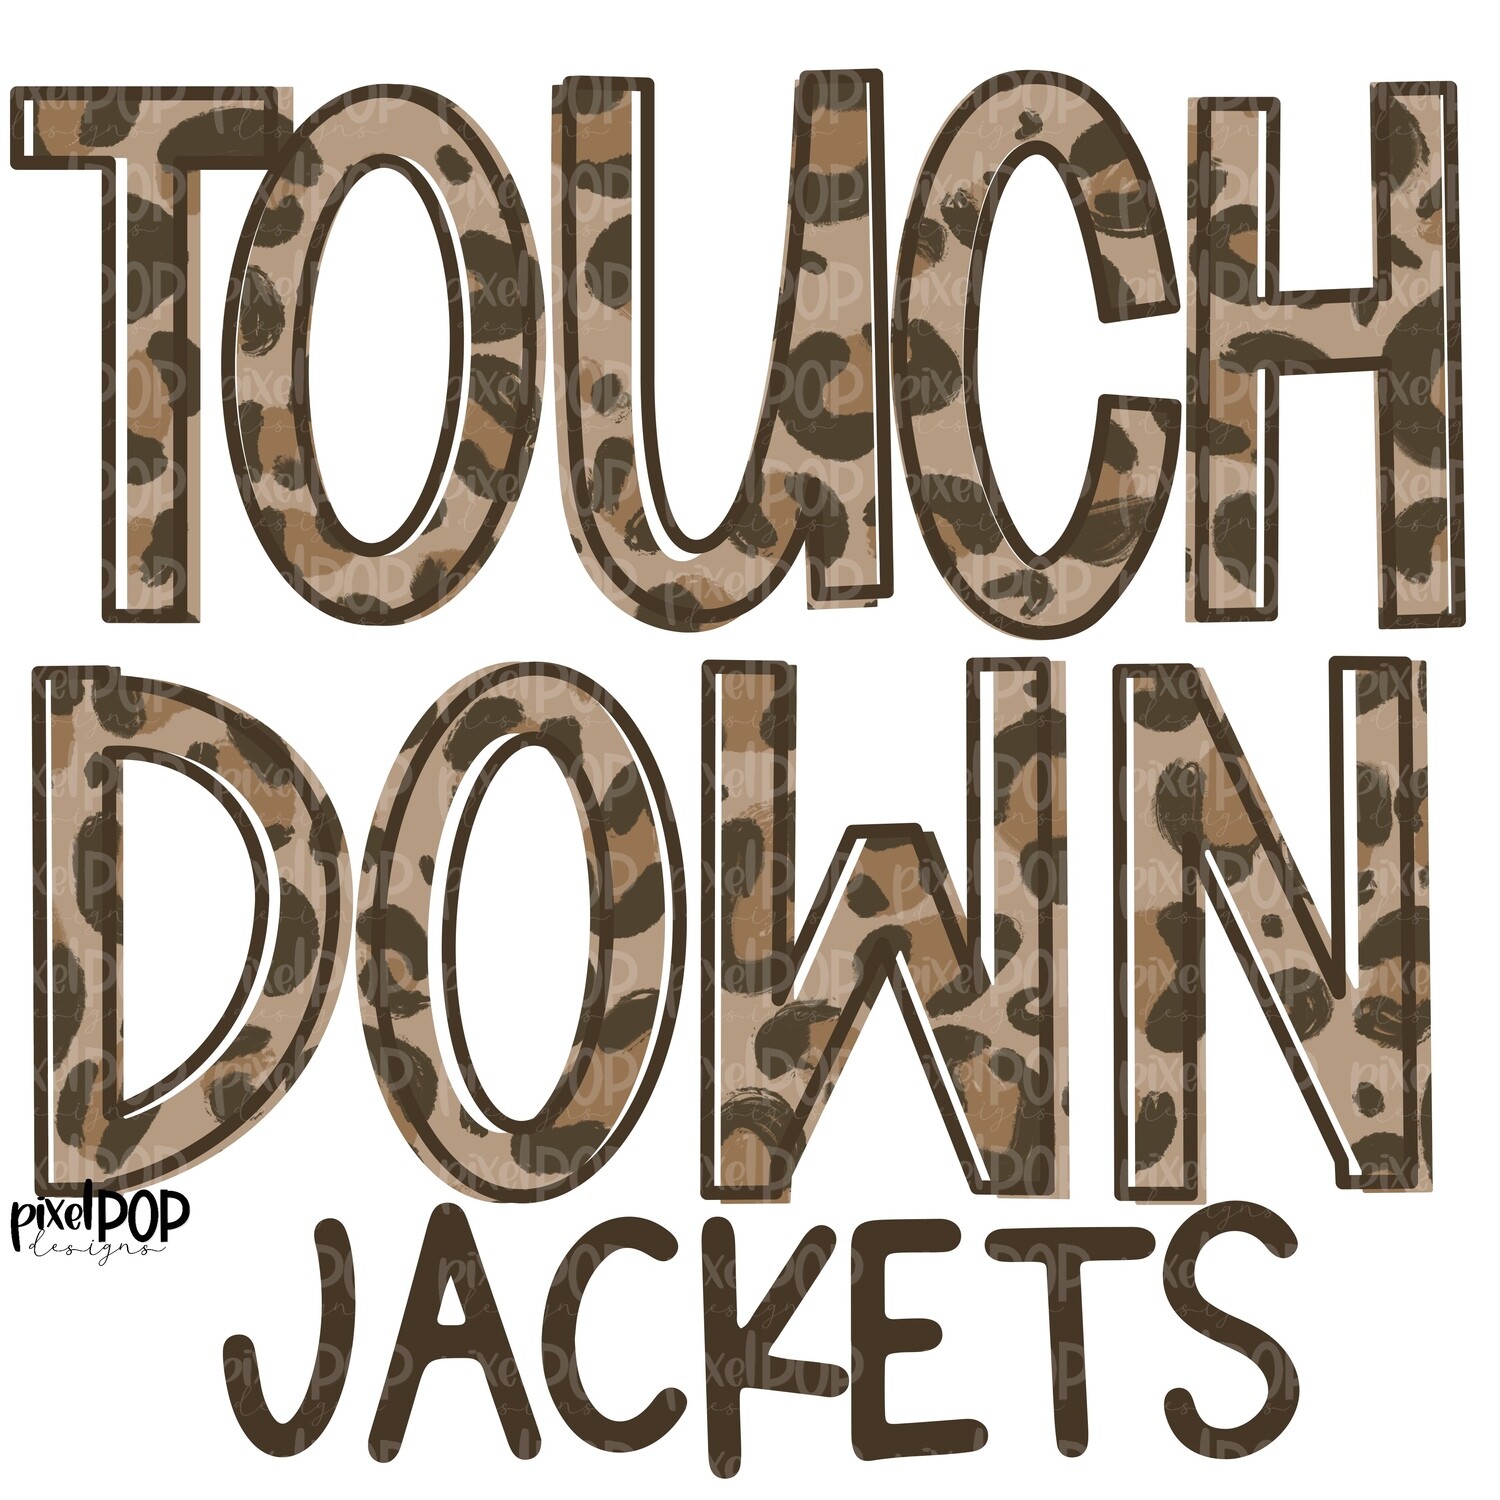 Jackets Touchdown Leopard Print Mascot PNG | Jackets Sublimation Design | Team Spirit Design | Jackets Clip Art | Digital Download | Printable Artwork | Sports Art